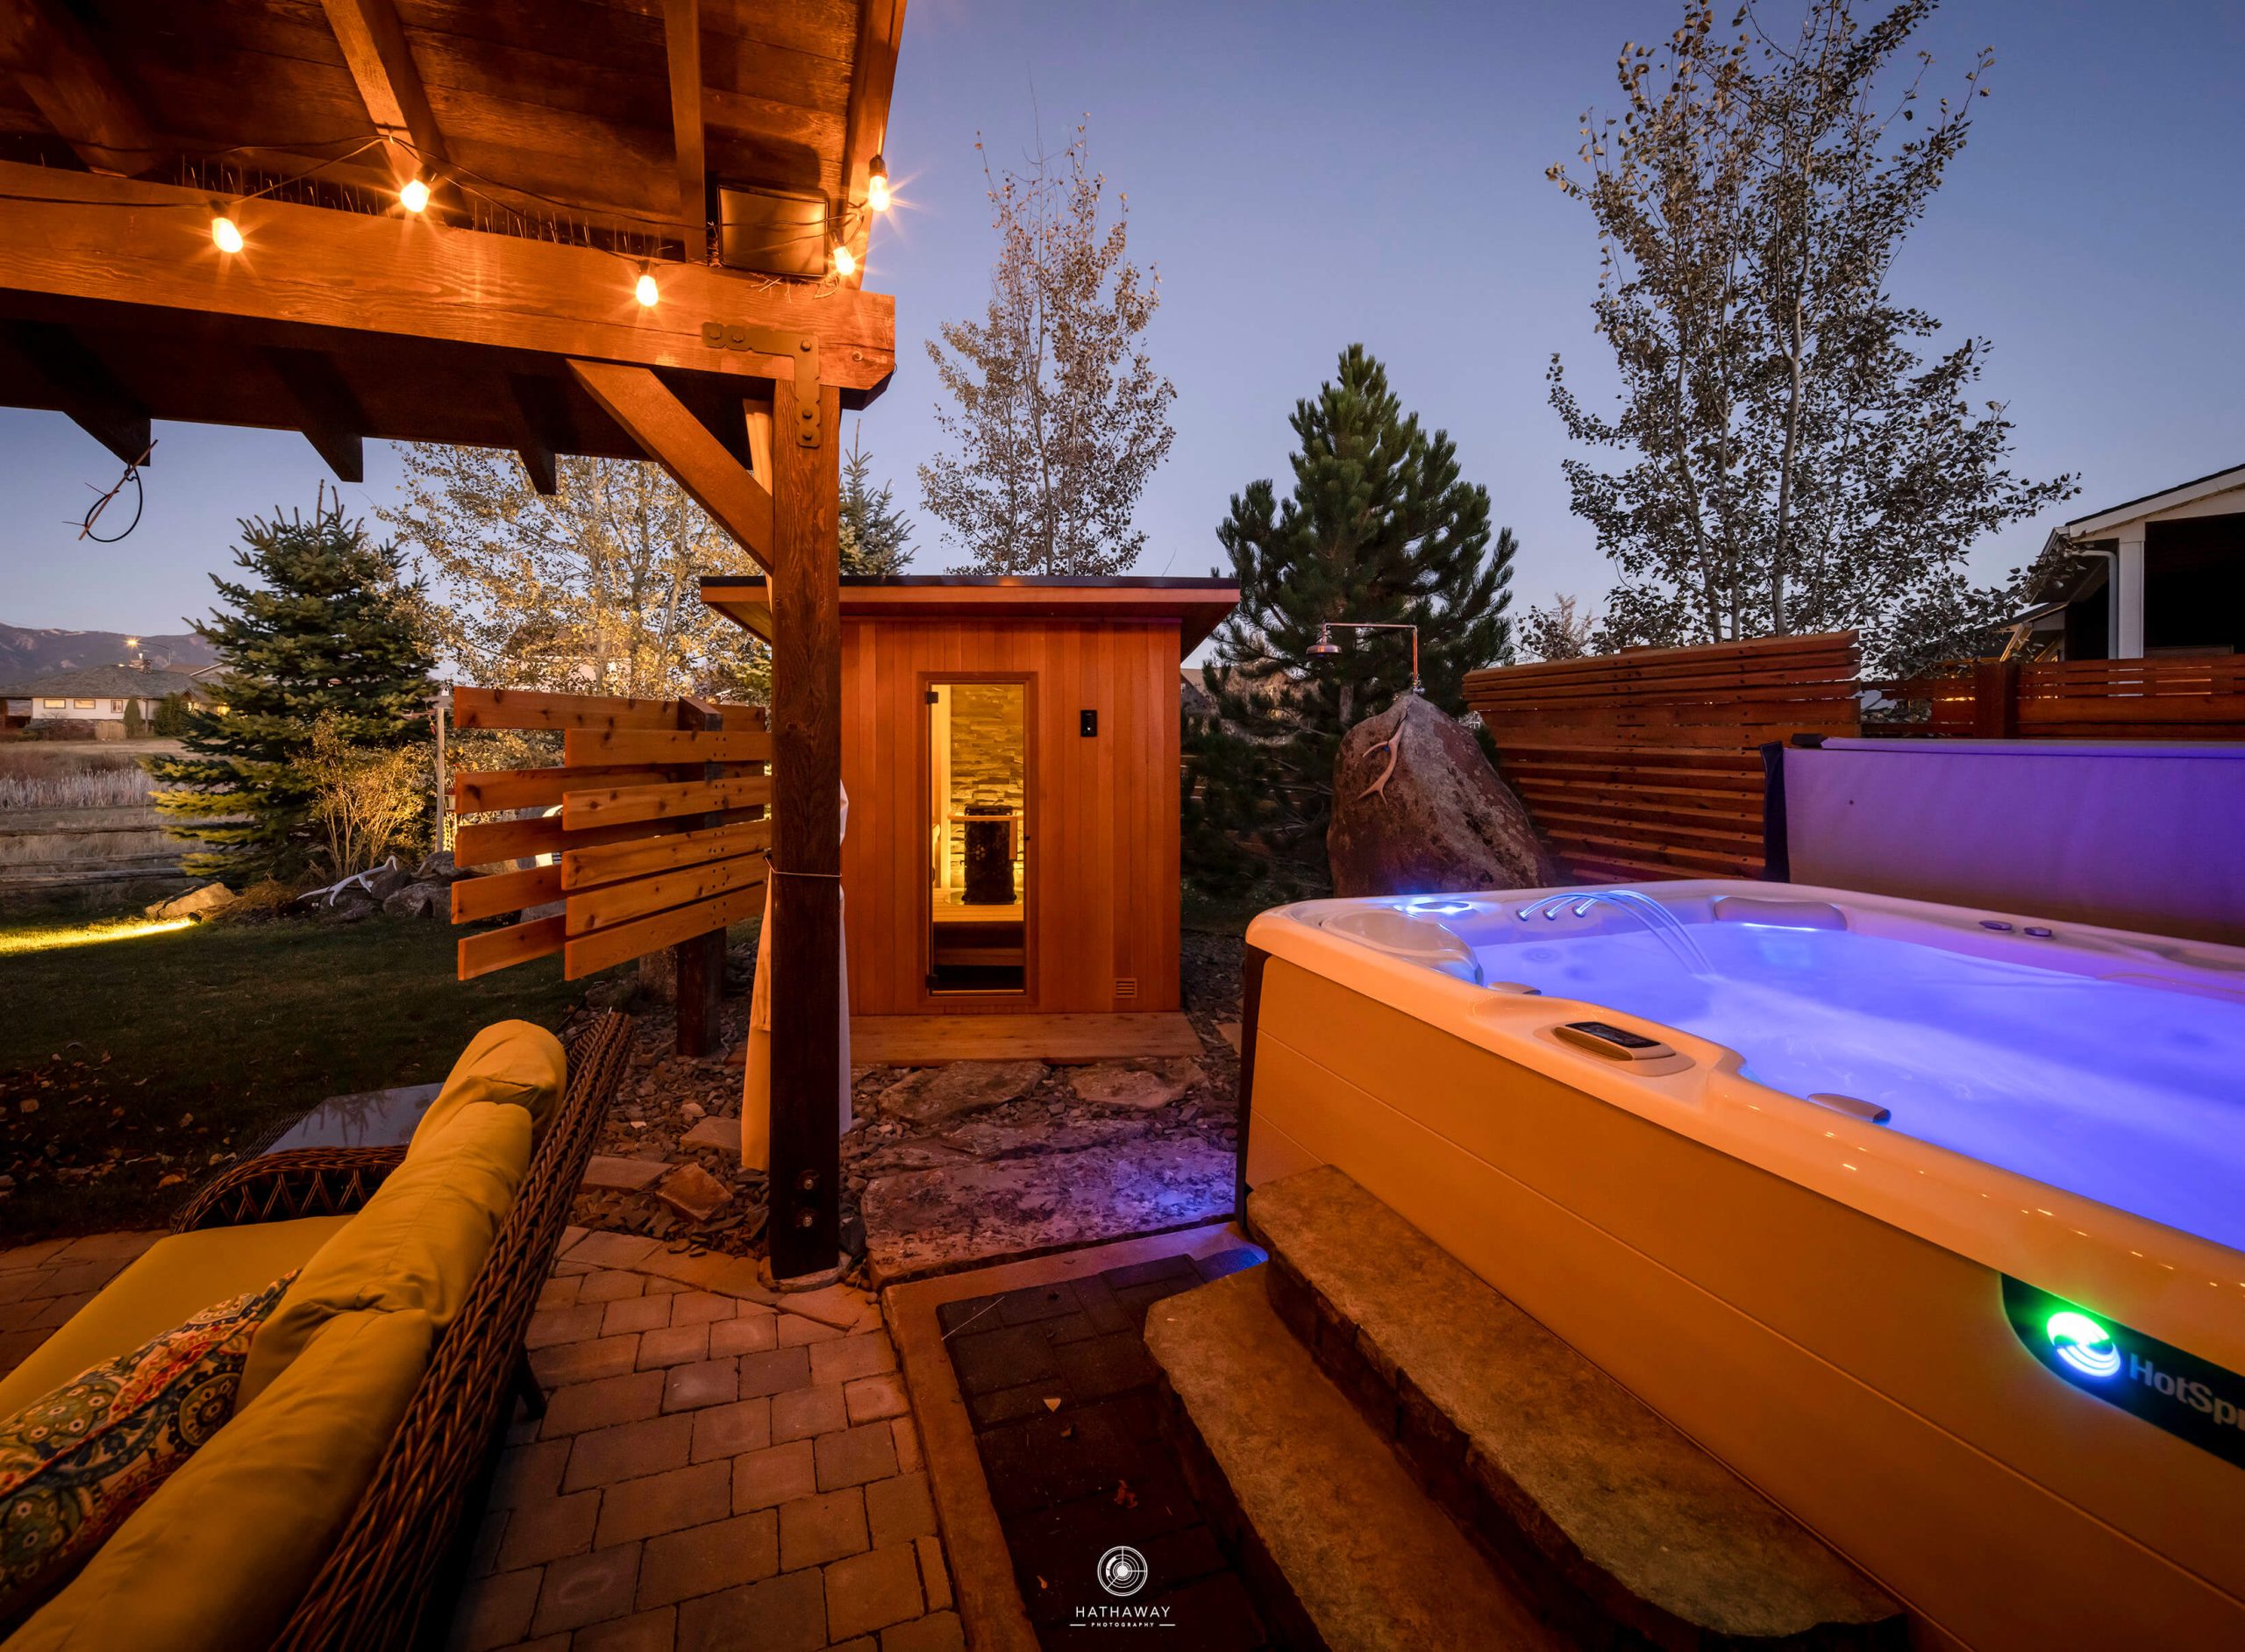 Sauna and swim spa in backyard retreat